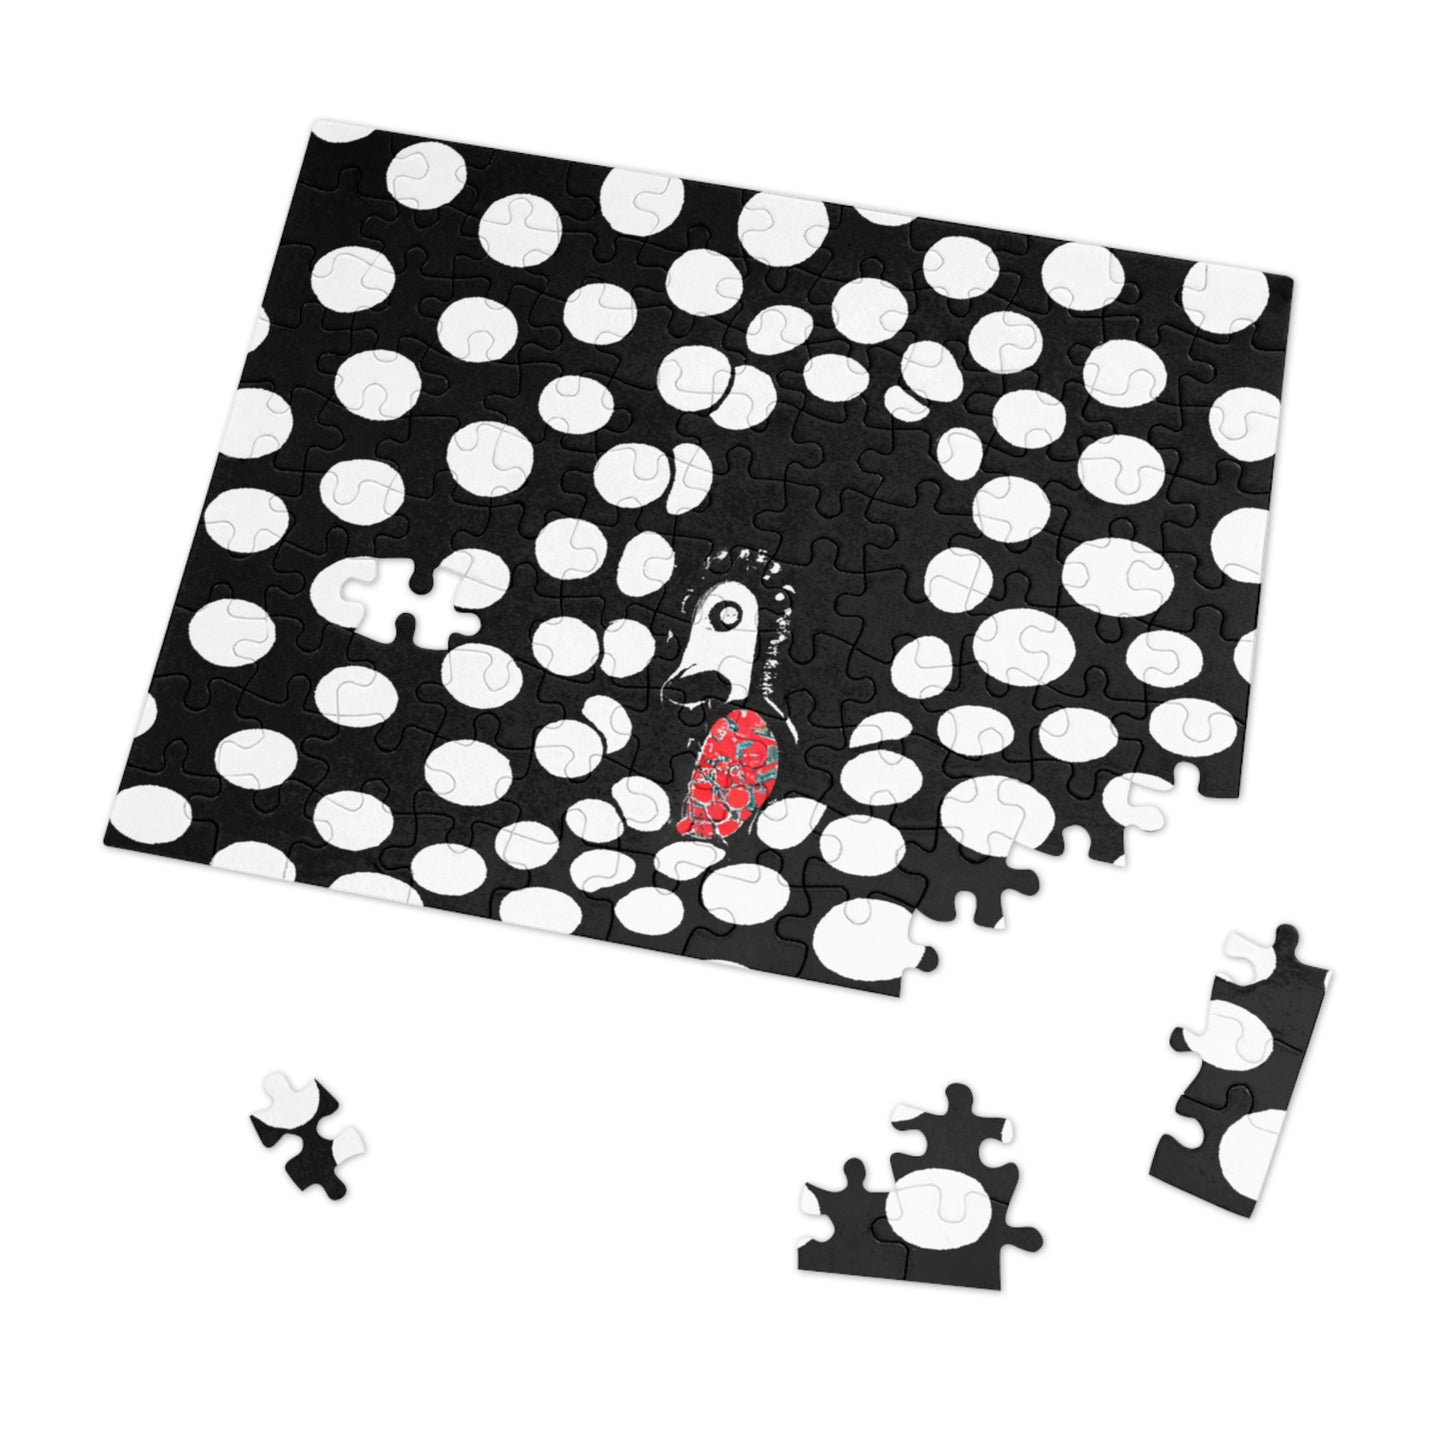 The Great Cavern Illumination - The Alien Jigsaw Puzzle